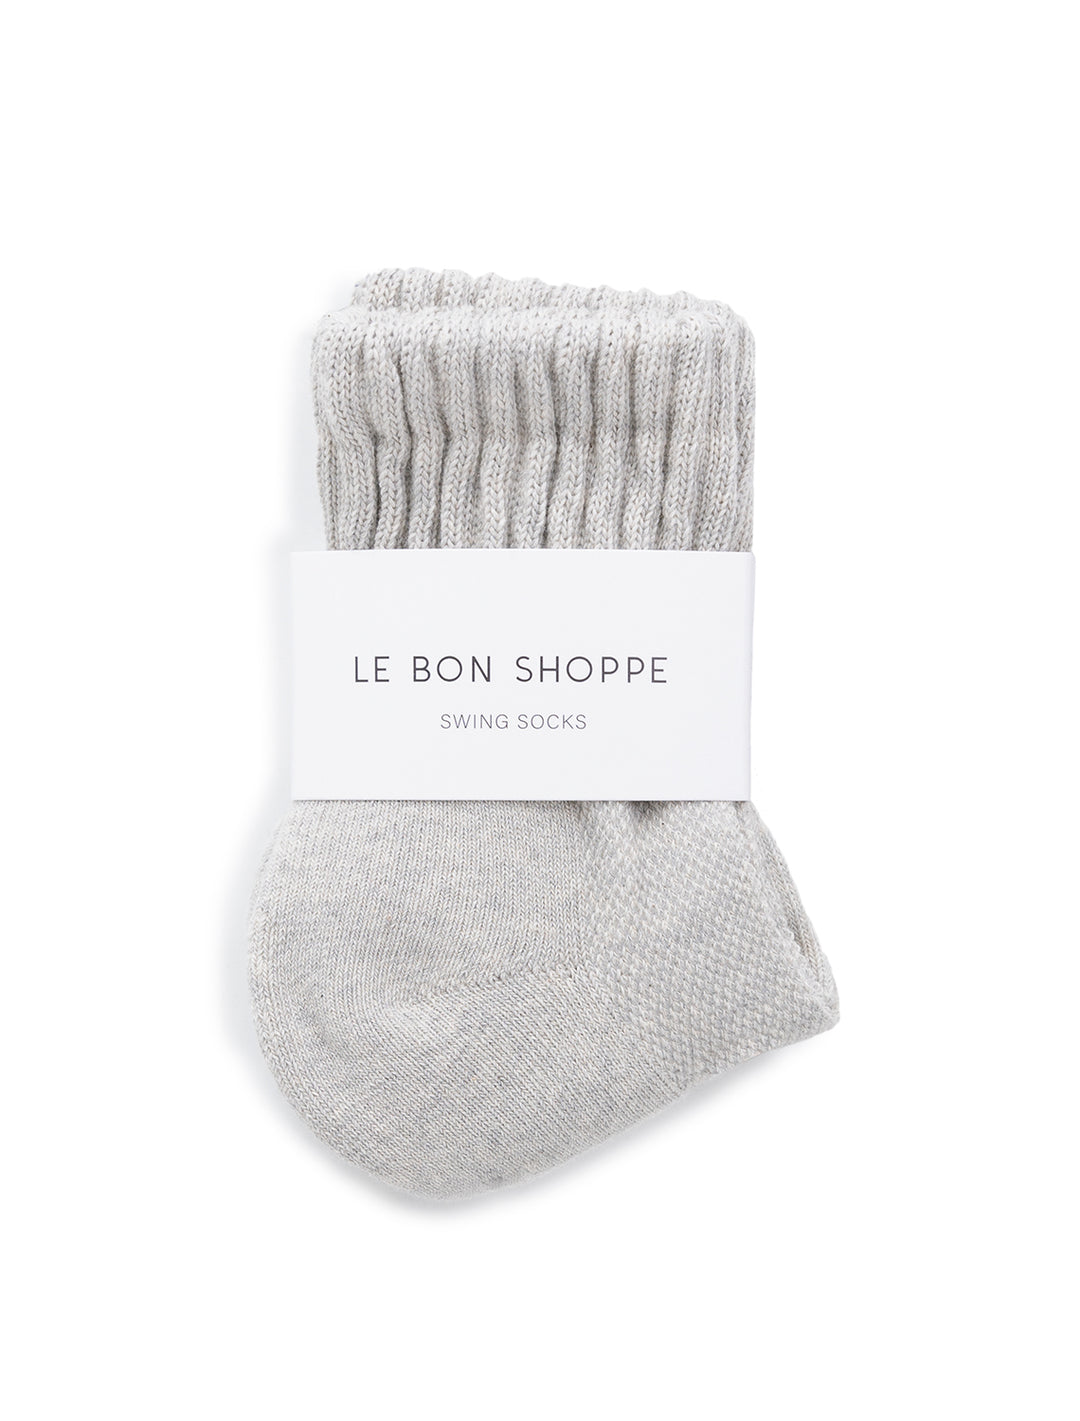 Front view of Le Bon Shoppe's swing socks in marble.